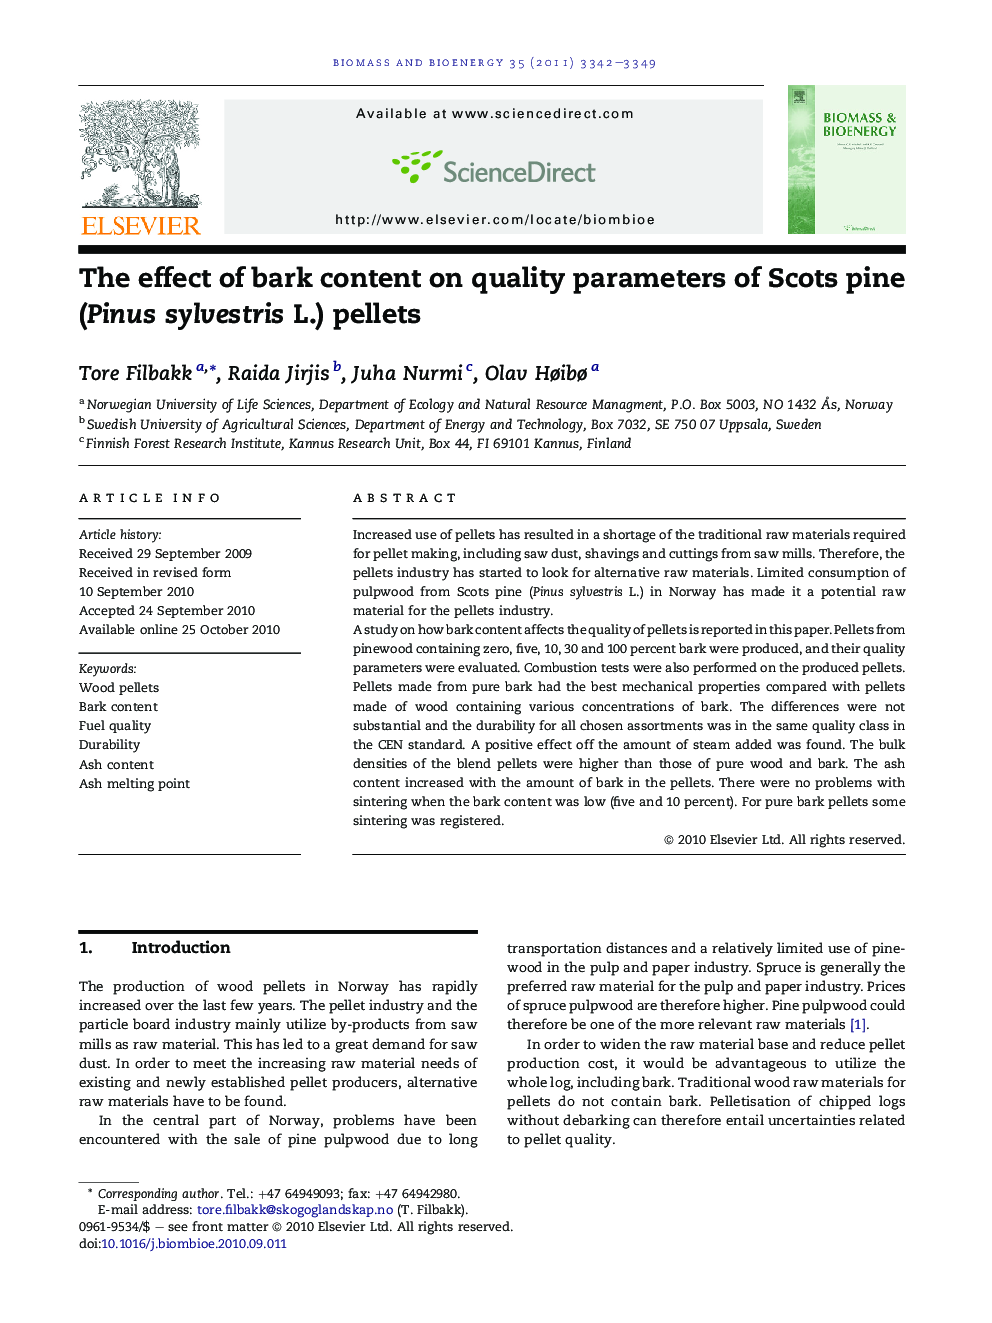 The effect of bark content on quality parameters of Scots pine (Pinus sylvestris L.) pellets